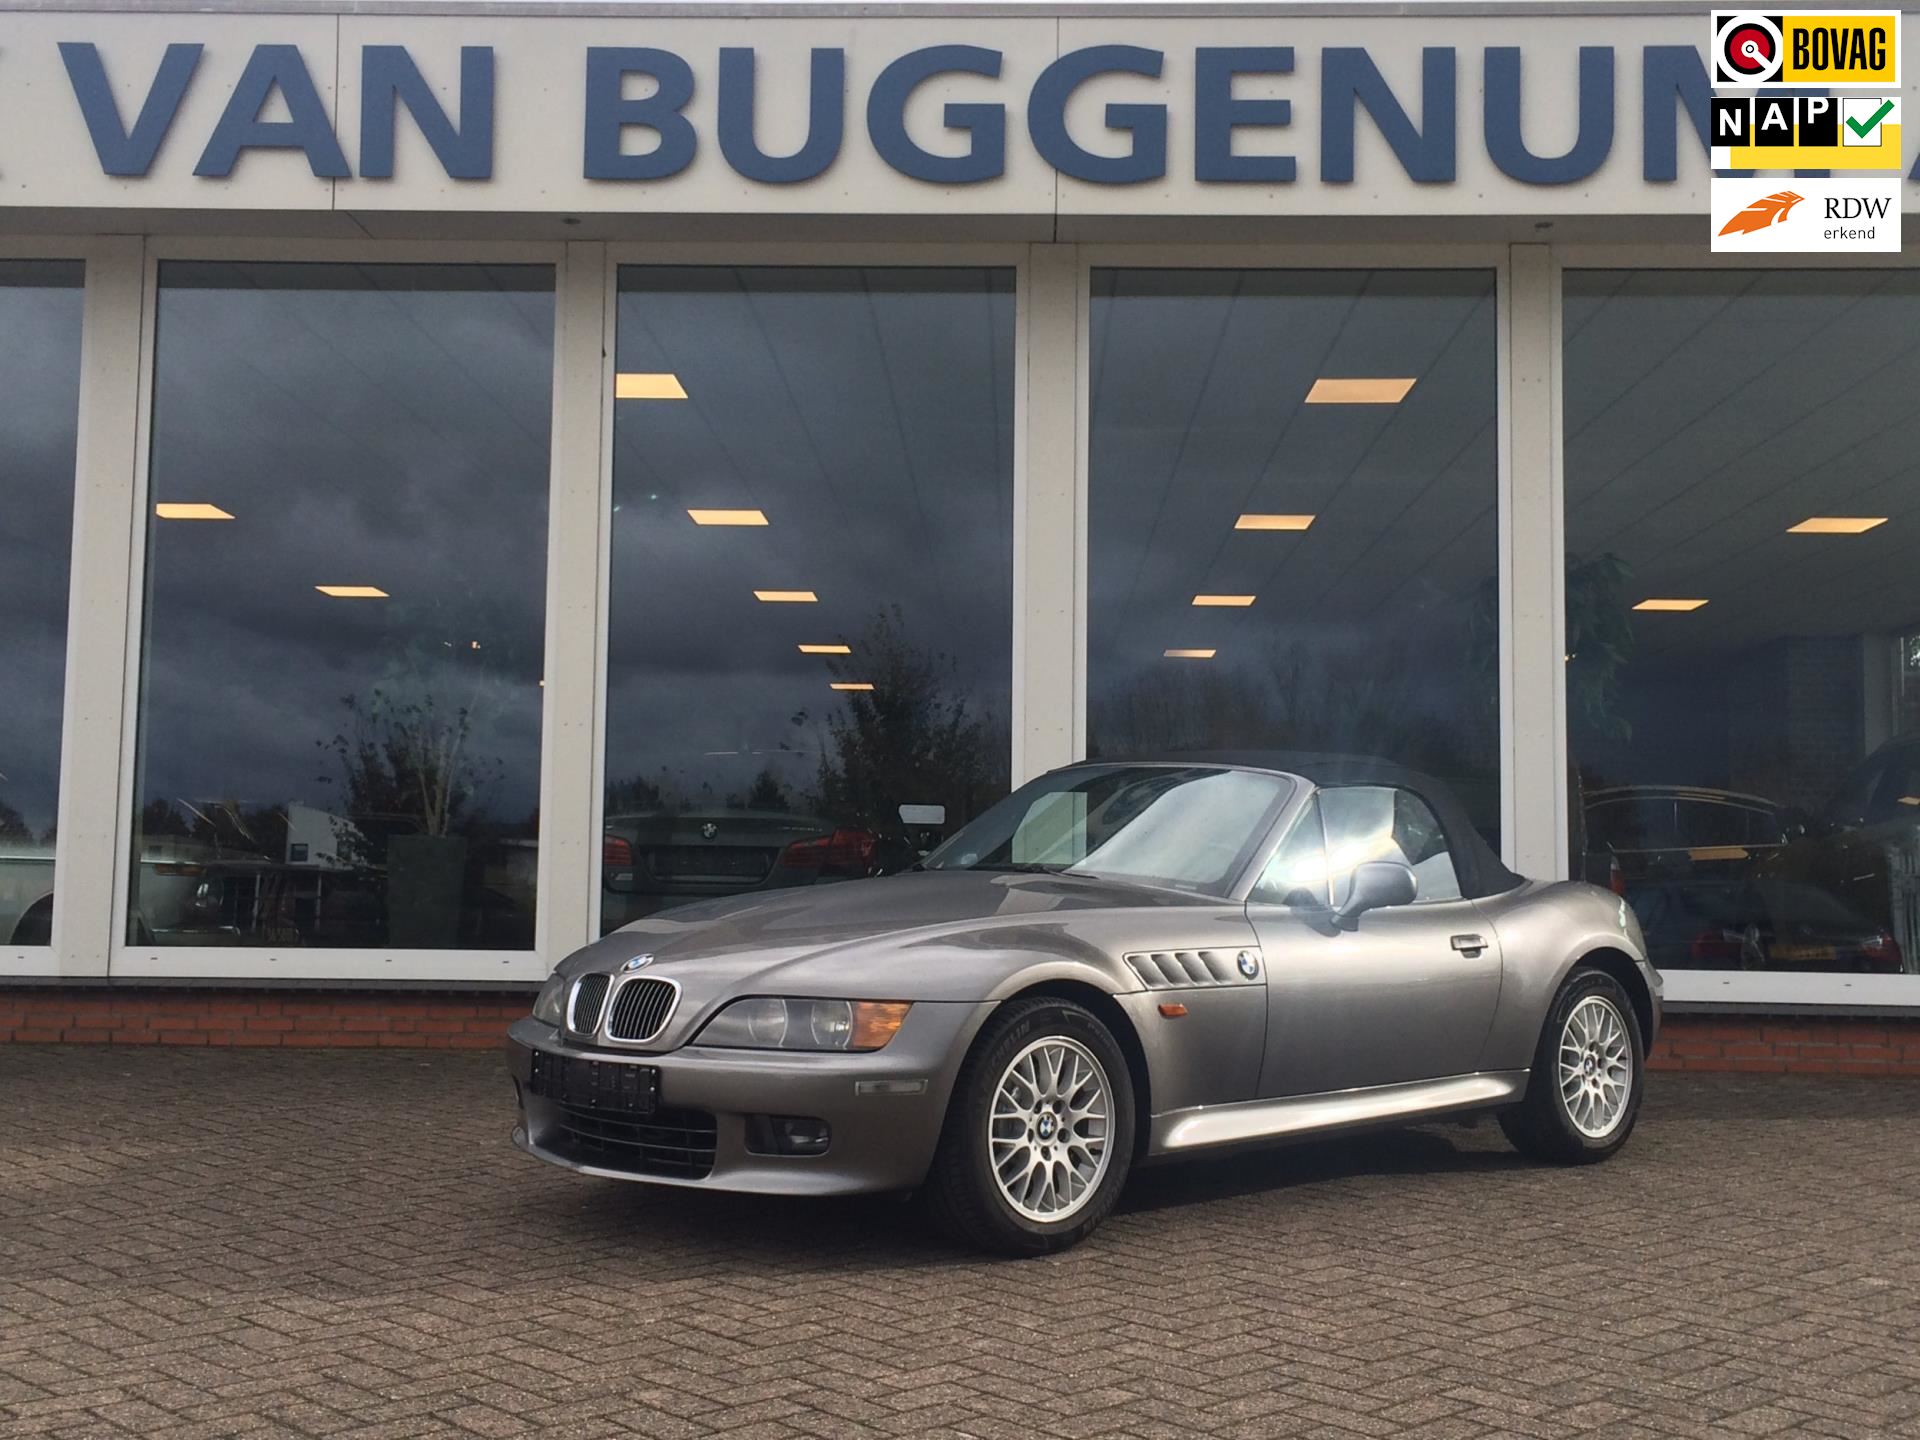 BMW Z3 Roadster occasion - Automobielbedrijf J. van Buggenum